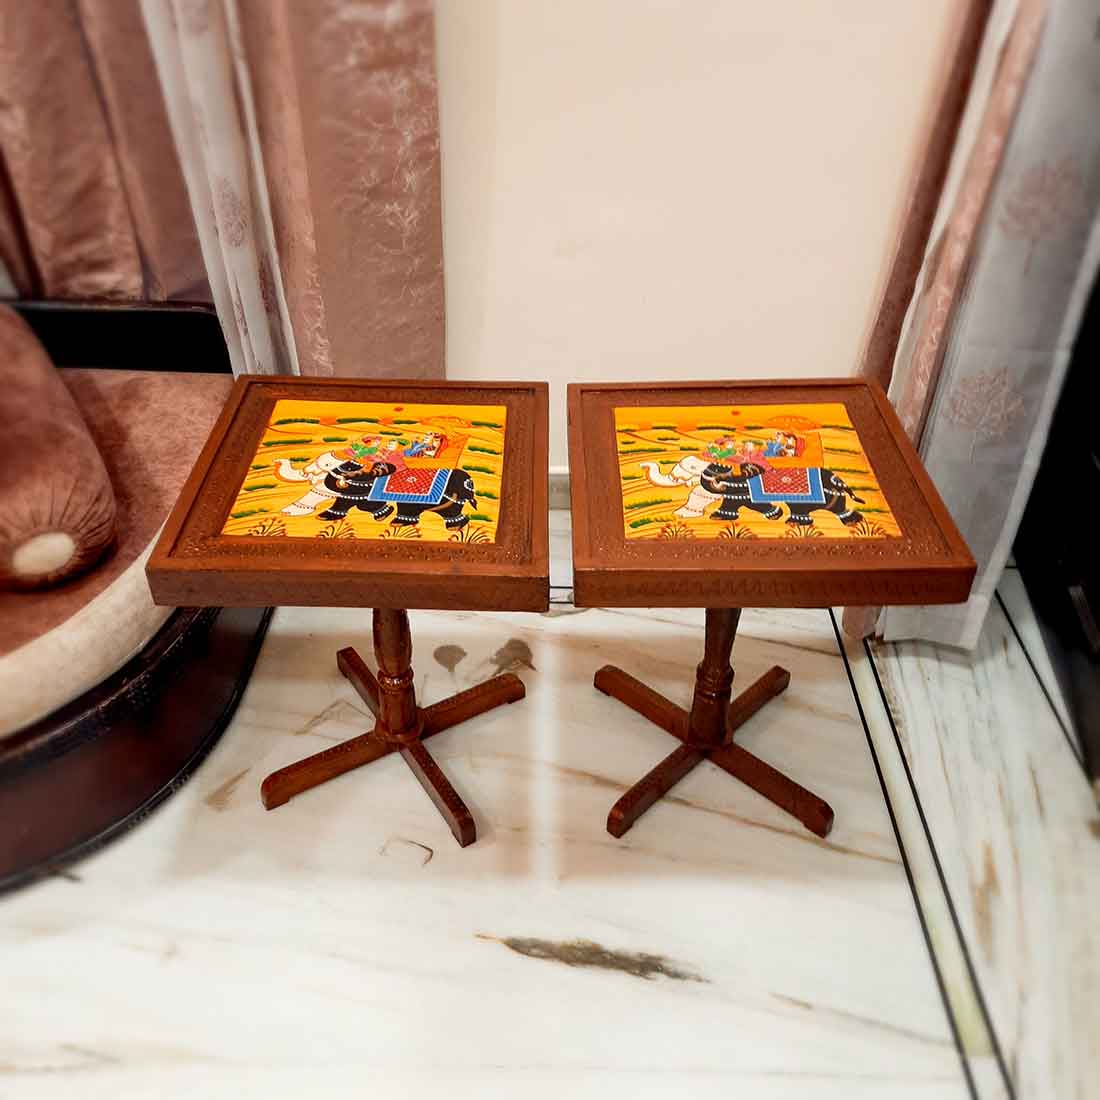 End Tables Wooden | Side Table | Stool - for Living Room, Corner Decor, Home Decor & Gifts - 20 Inch (Set of 2) - apkamart